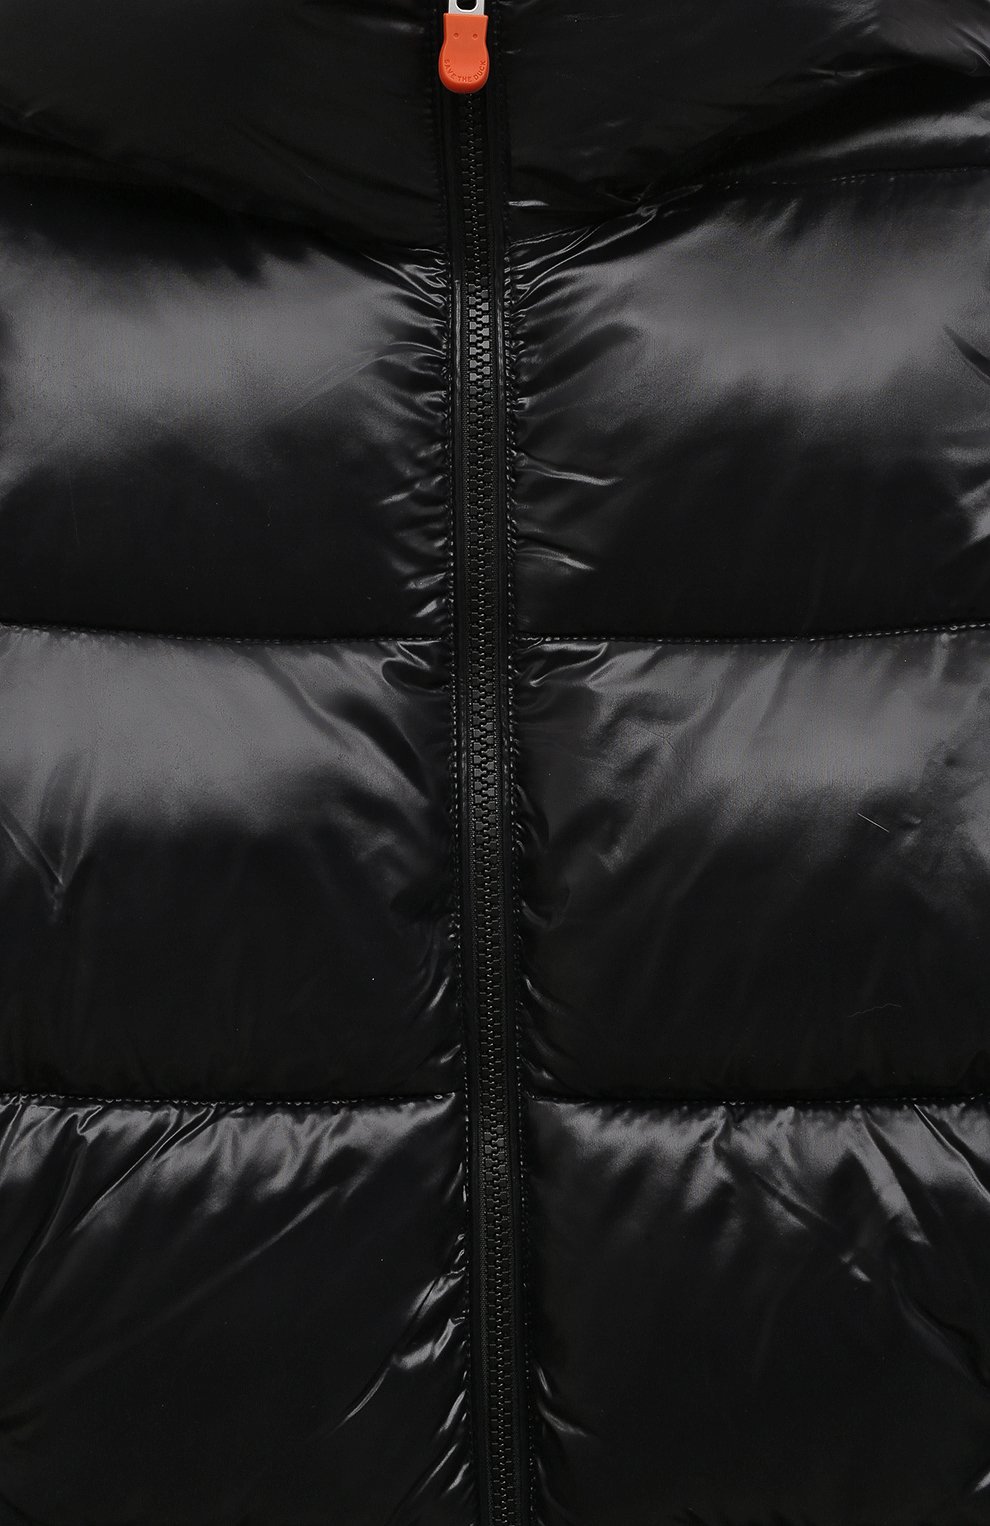 Детская утепленная куртка SAVE THE DUCK черного цвета, арт. J45510G/MILLIE/LUCK17/4-8 | Фото 3 (Р укава: Длинные; Кросс-КТ: Утепленный; Материал внешний: Синтетический материал; Материал сплава: Проставлено; Материал подклада: Синтетический материал; Драгоценные камни: Проставлено)